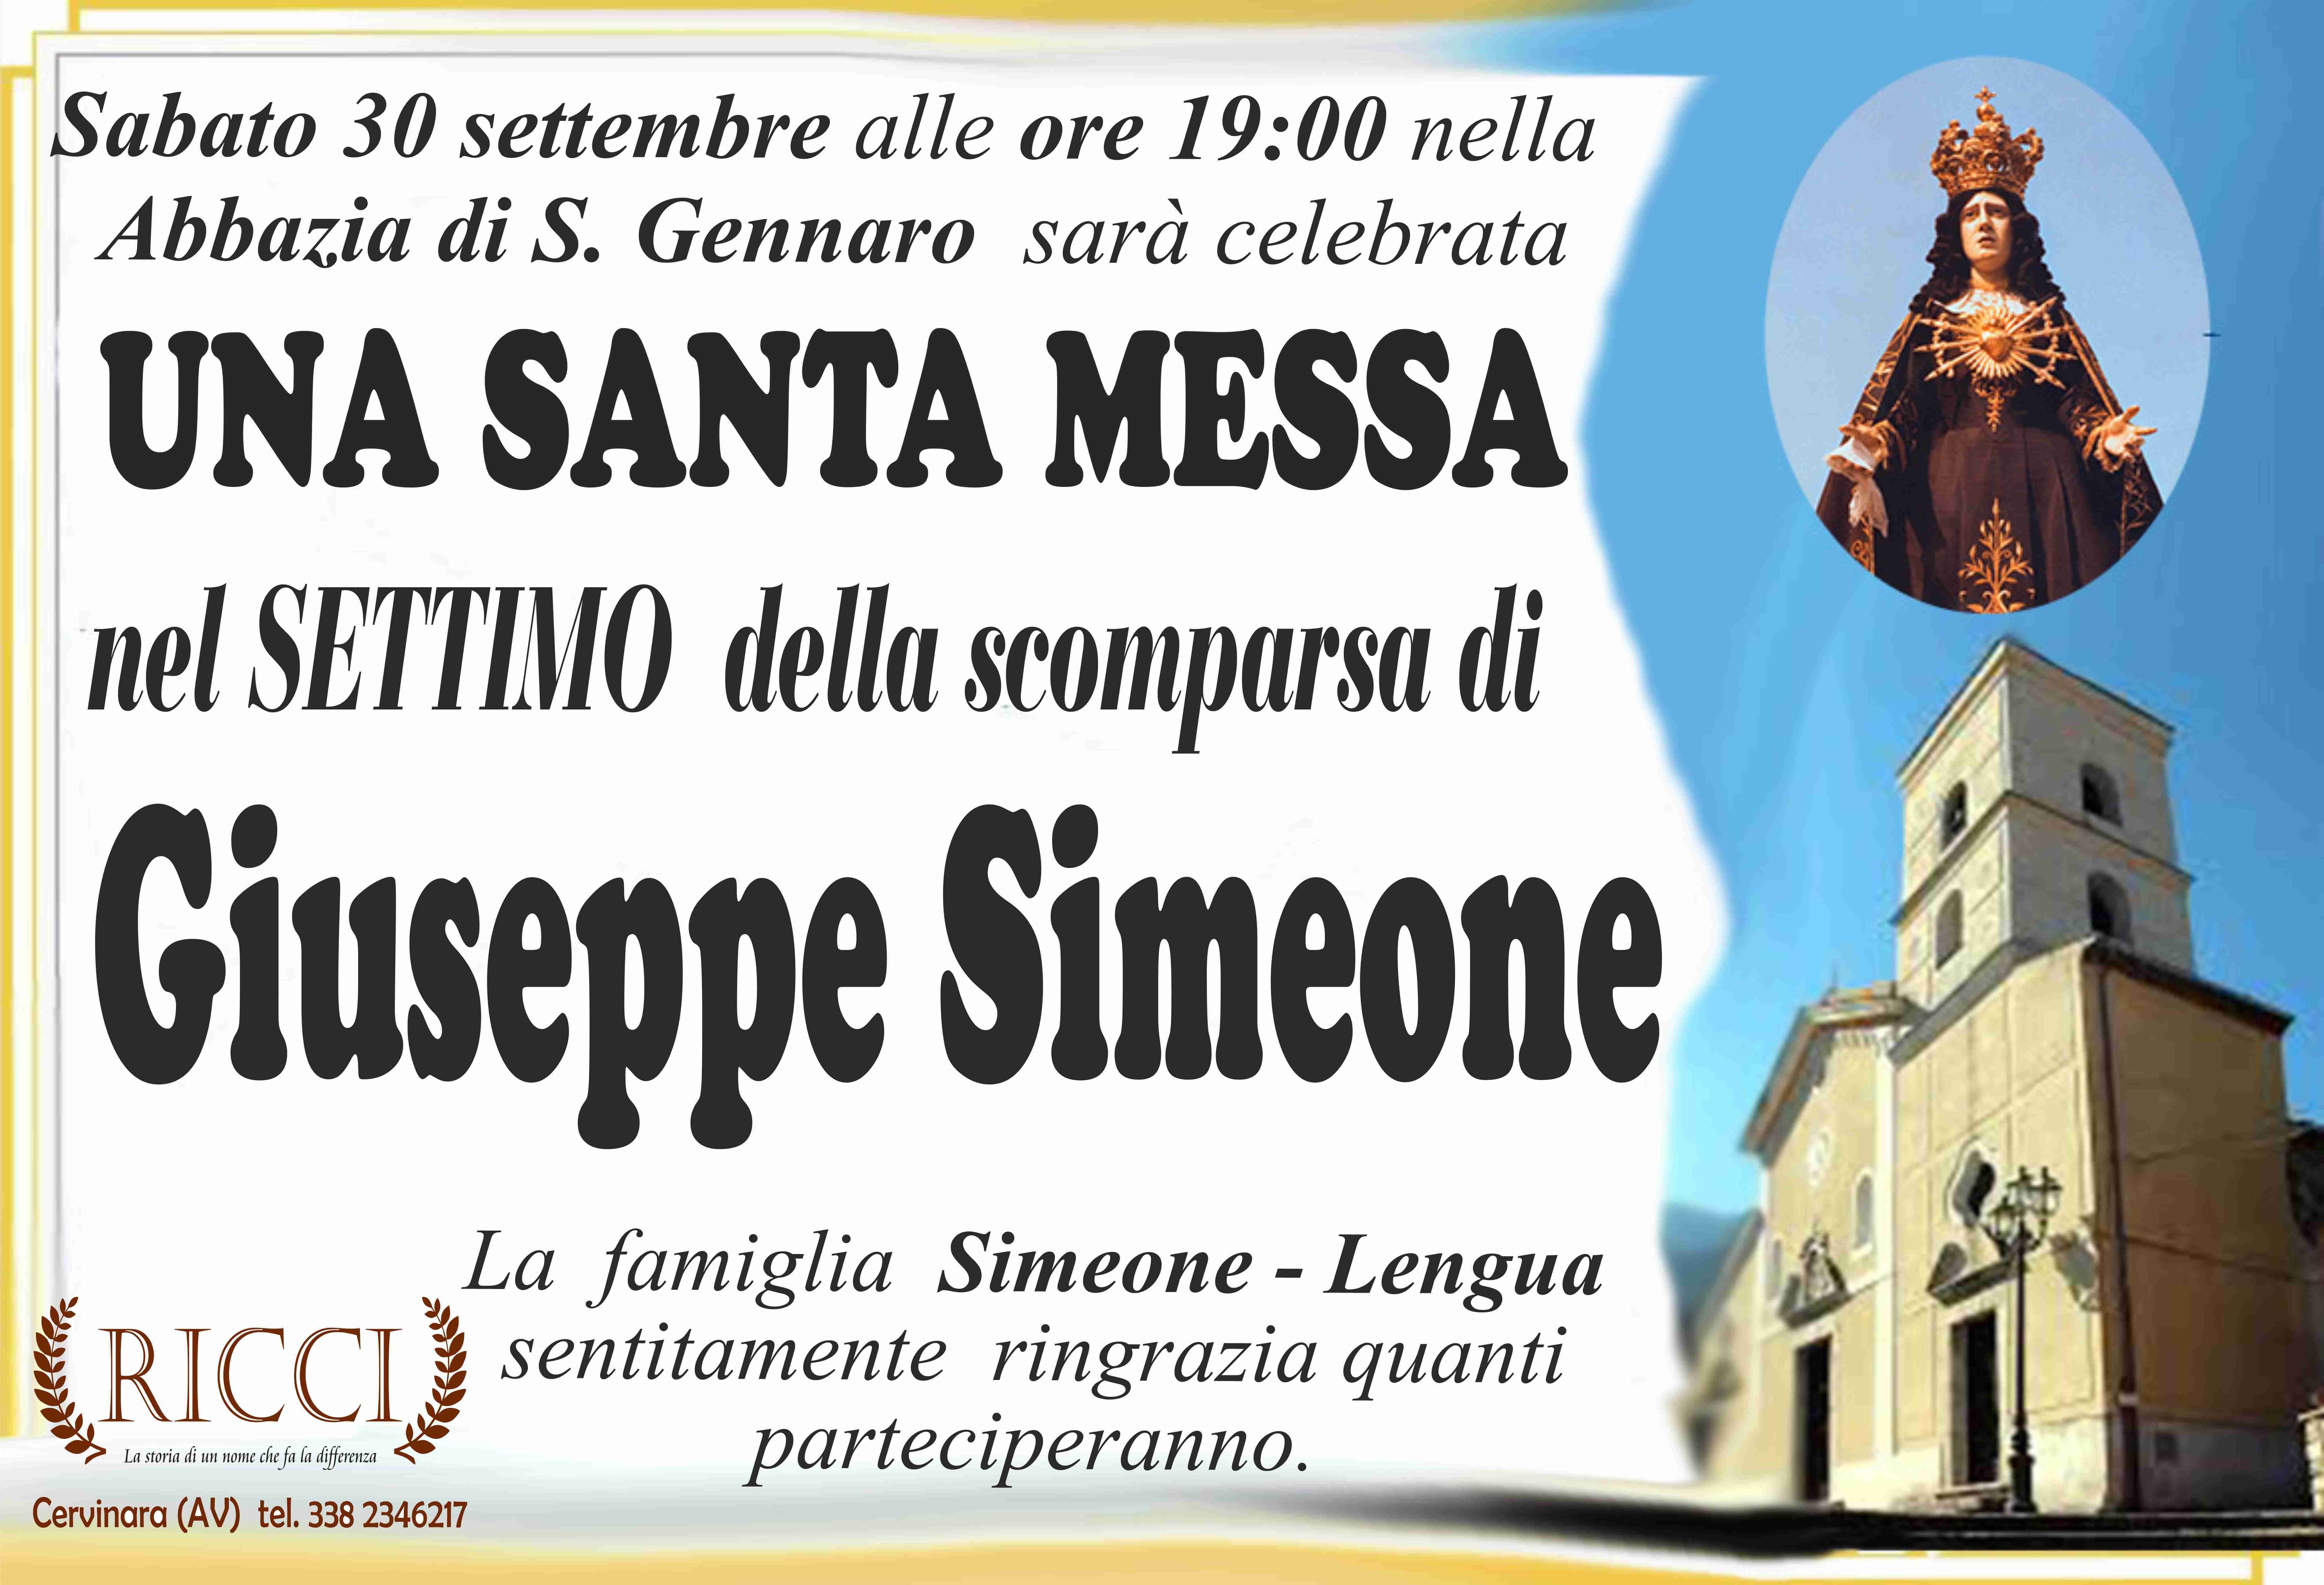 Giuseppe Simeone